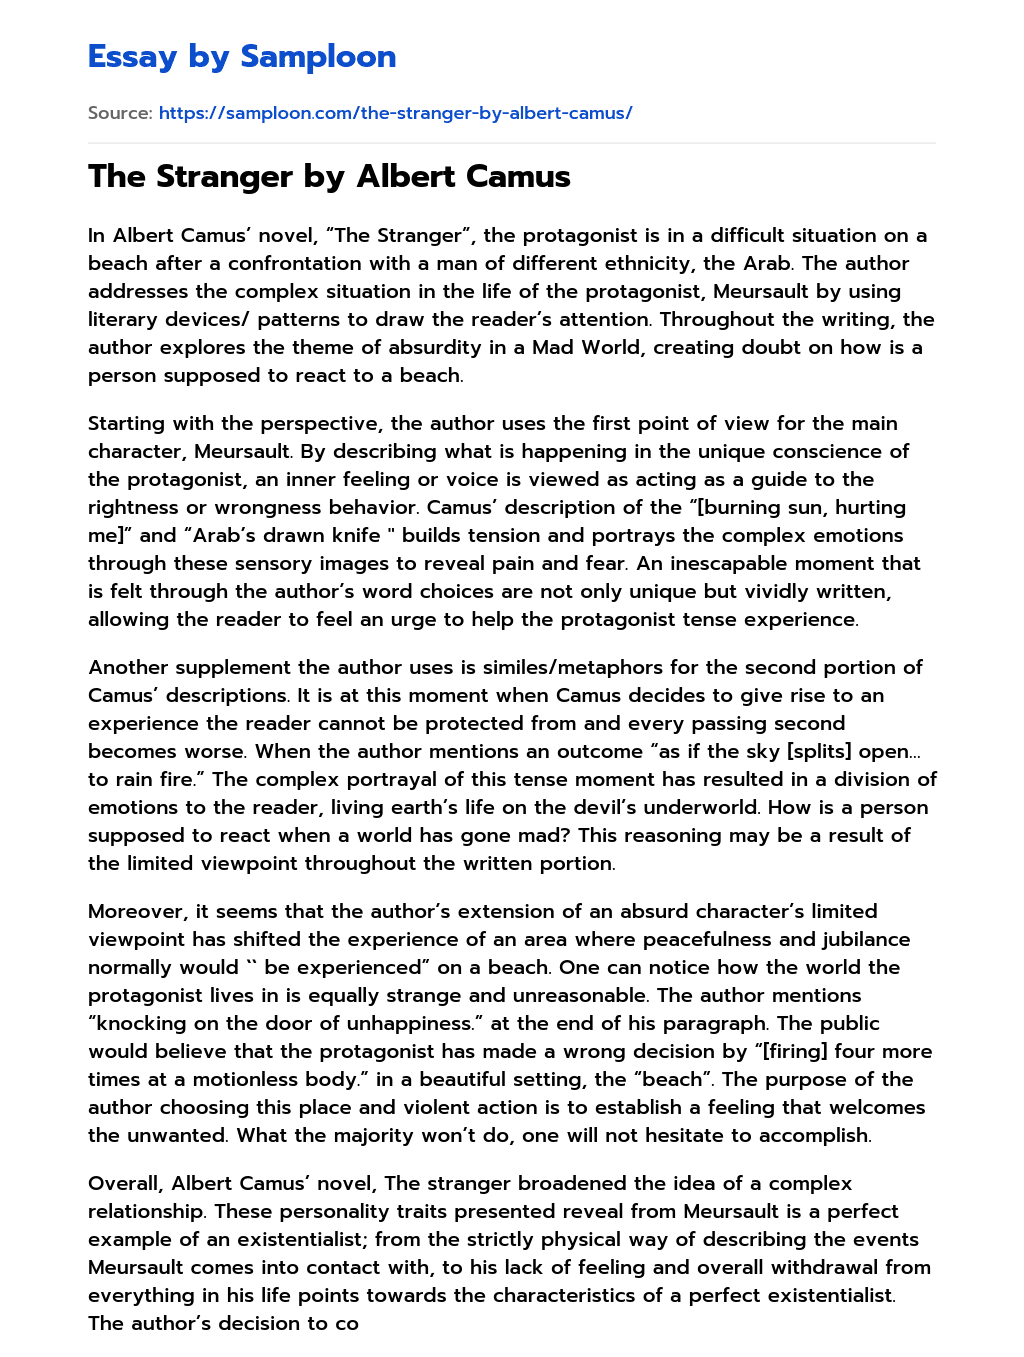 sartre essay on the stranger